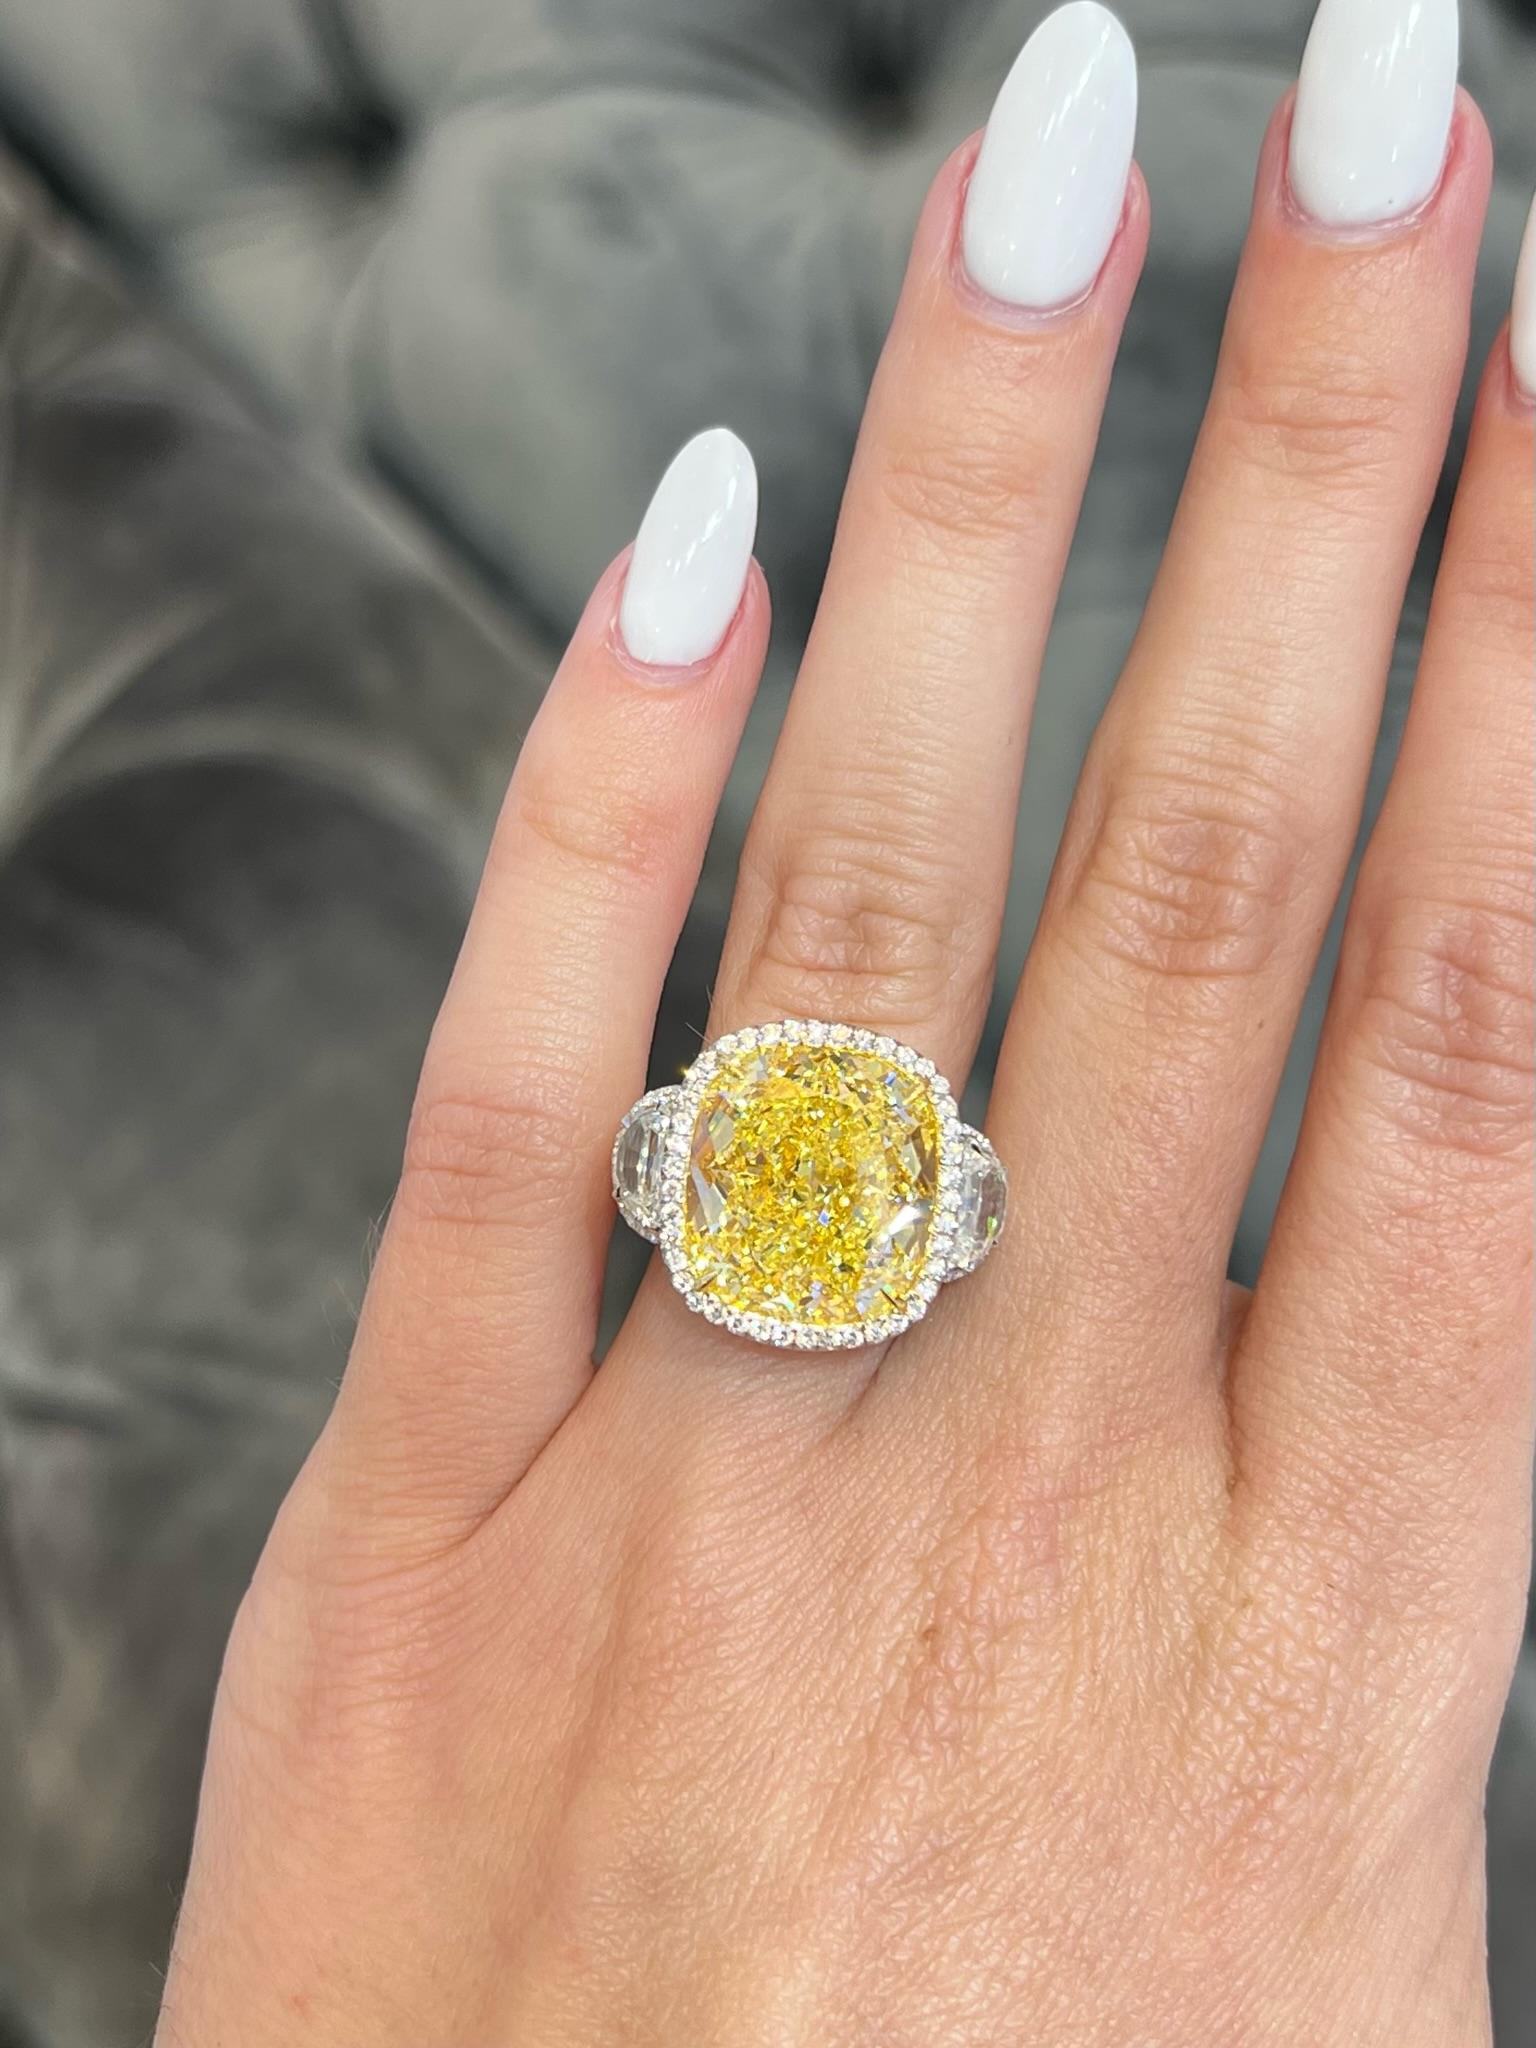 David Rosenberg 16.06 Carat Cushion Cut Fancy Yellow GIA Diamond Engagement Ring For Sale 2